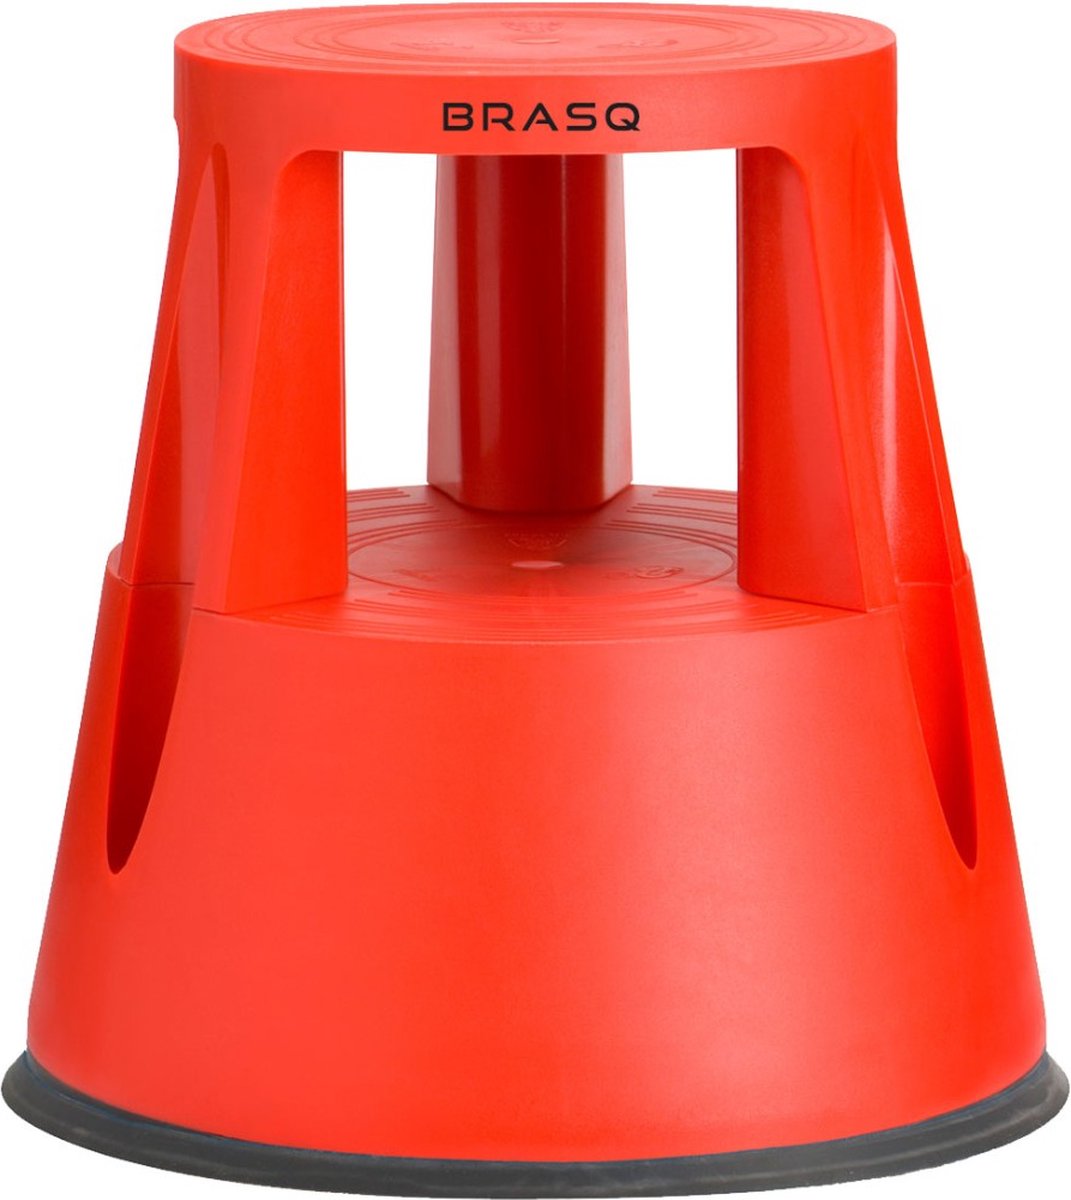 BRASQ Opstapkrukje Verrijdbaar Comfort Rood hoogwaardig kunststof ST200, draagvermogen 150 kg, opstapkruk, olifantenvoet, kantoorkruk, trap, roltrap, kruk